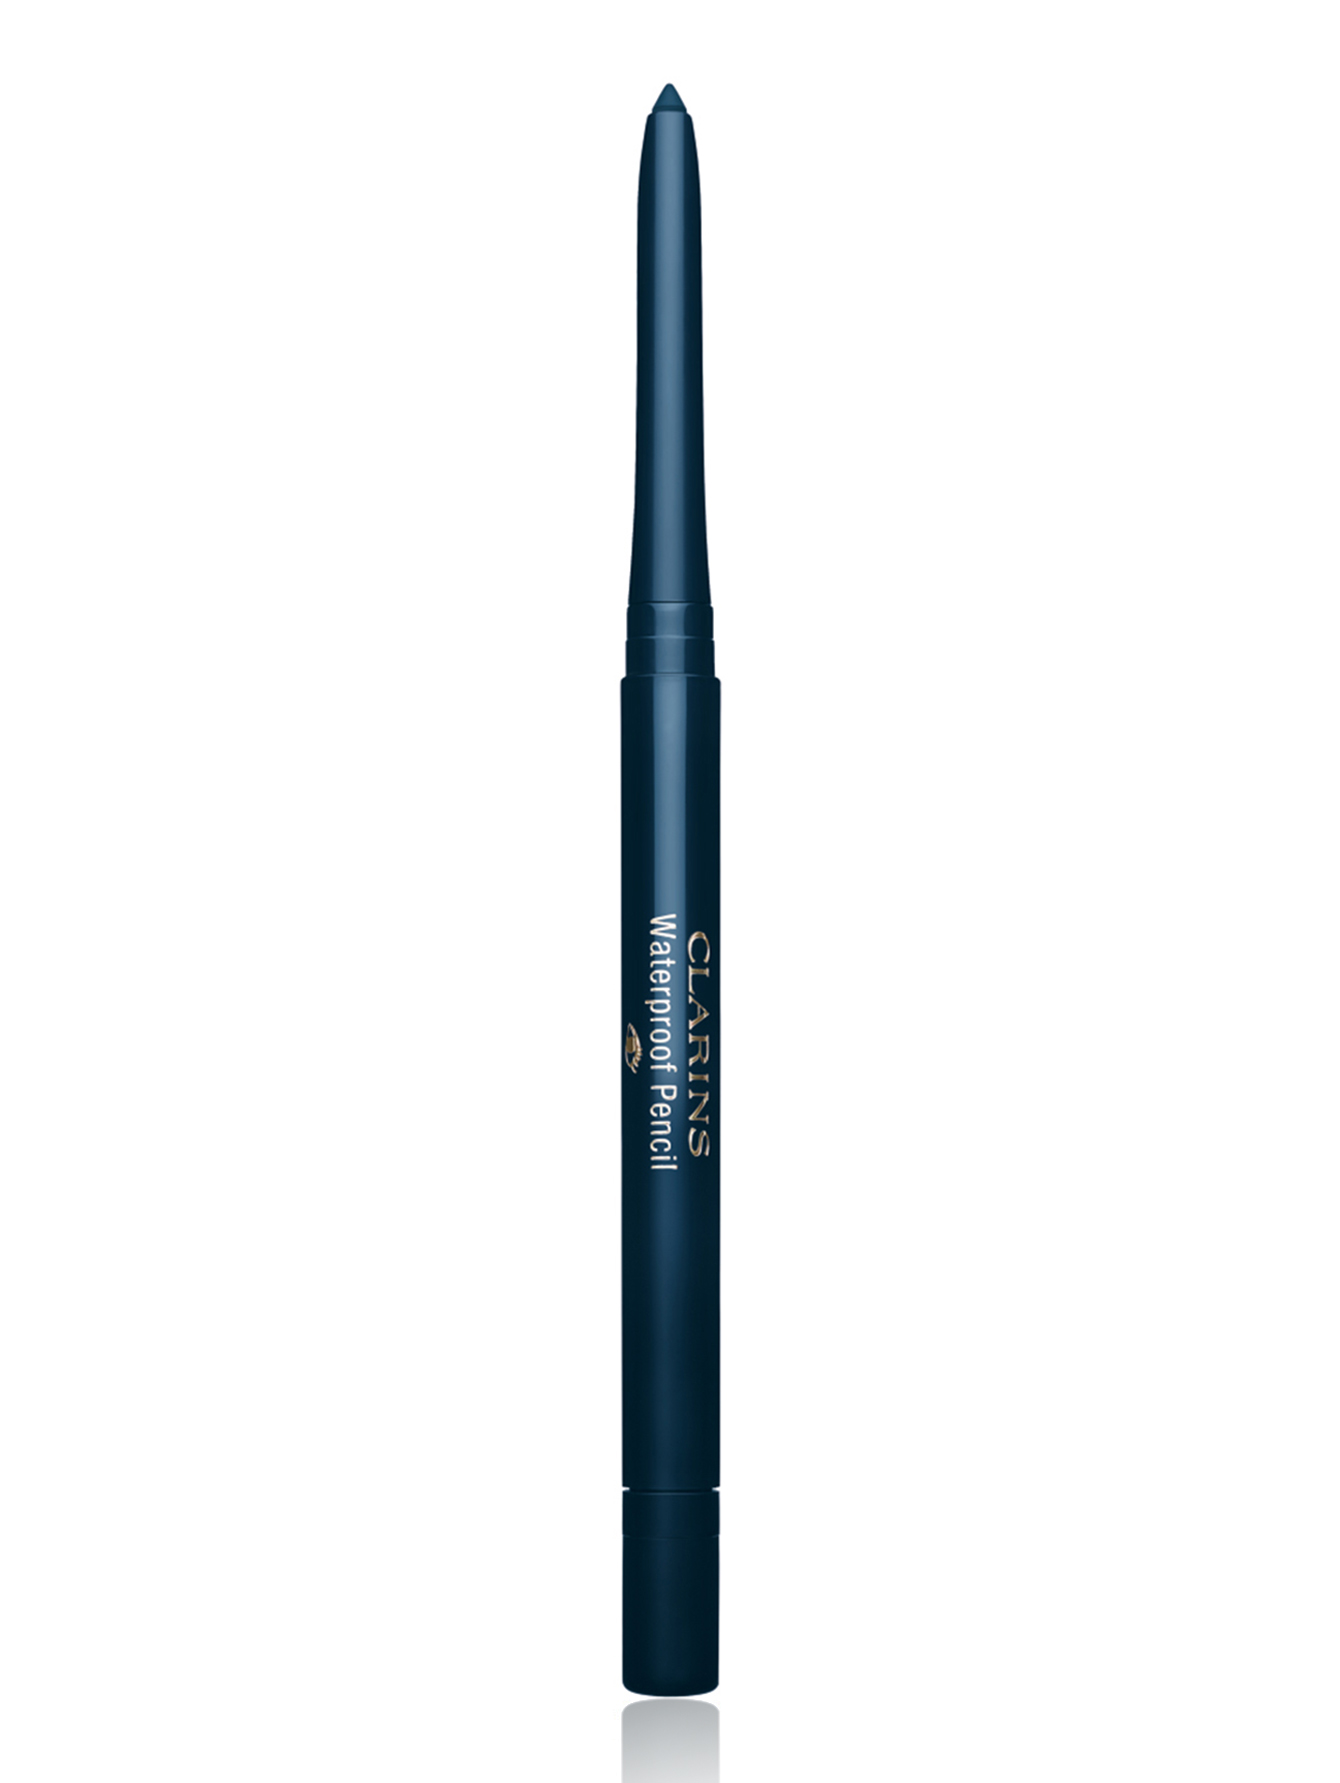 Карандаш для глаз Waterproof Pencil 03 Makeup - Общий вид